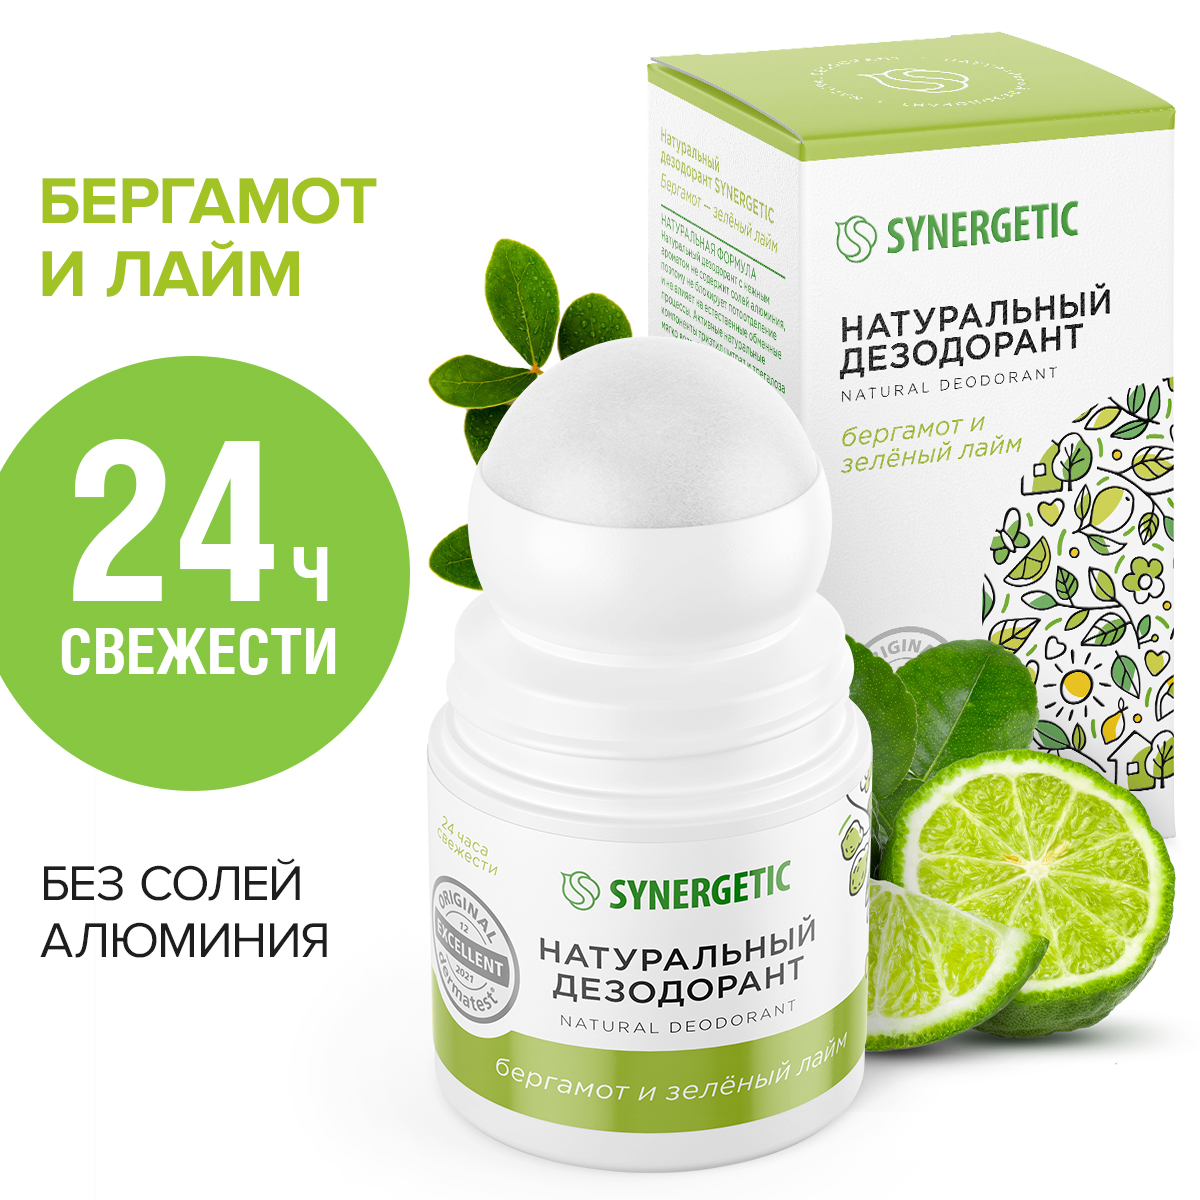 Дезодорант Synergetic бергамот-зеленый лайм, натуральный, 50 мл